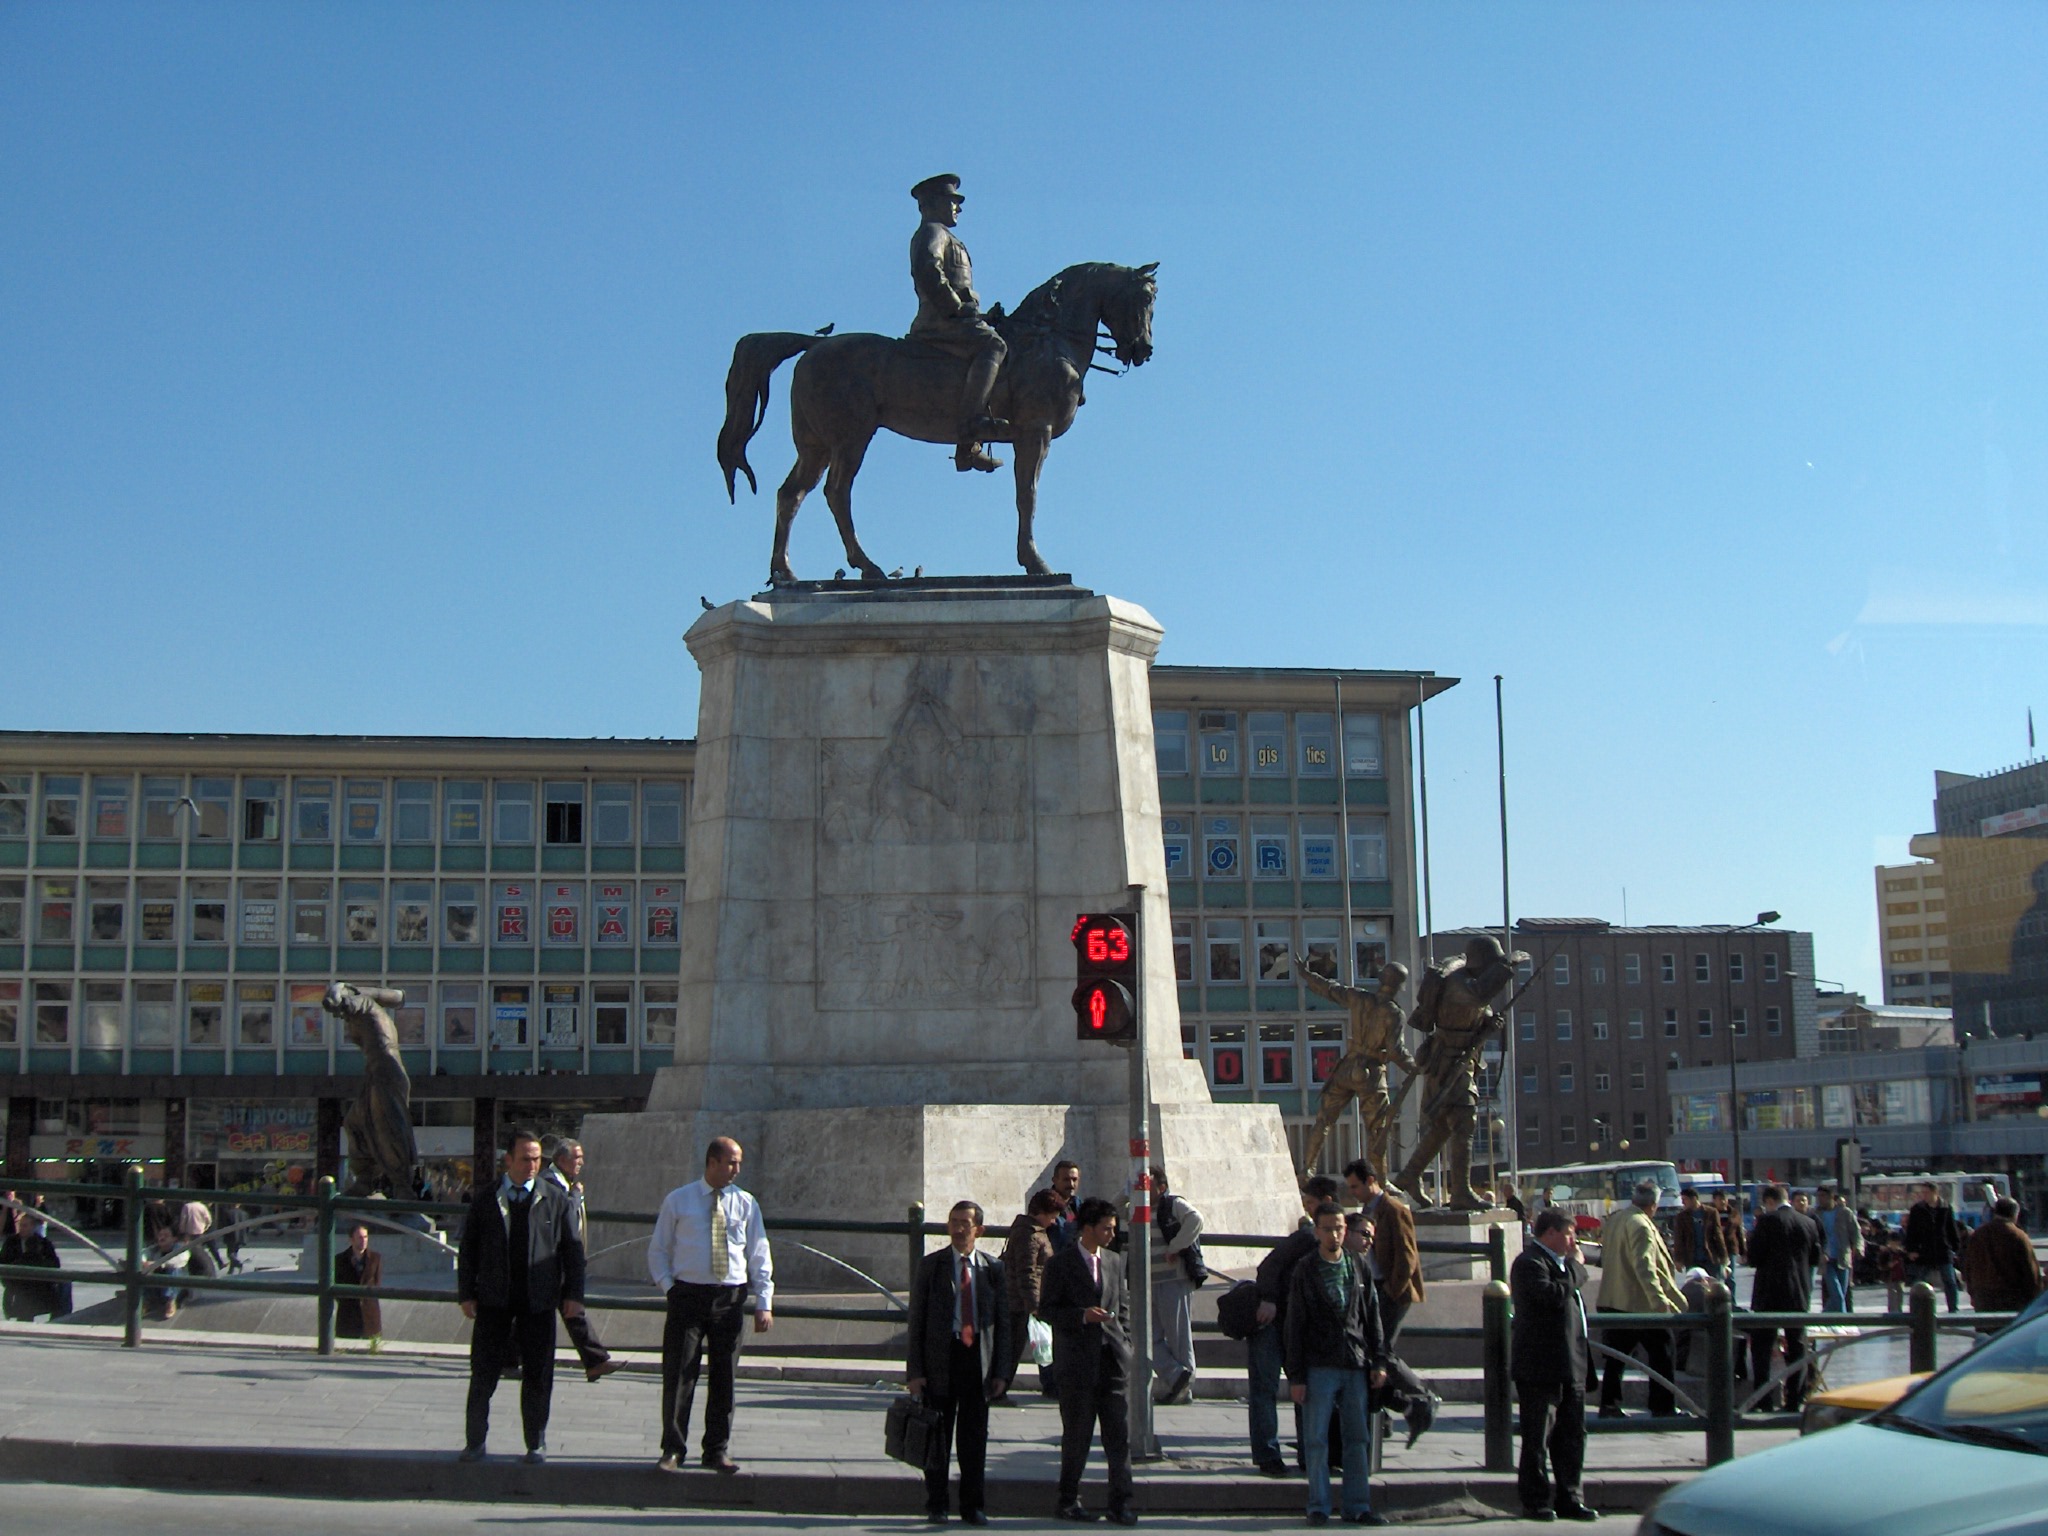 Atatürk Boulevard - Wikipedia, the free encyclopedia